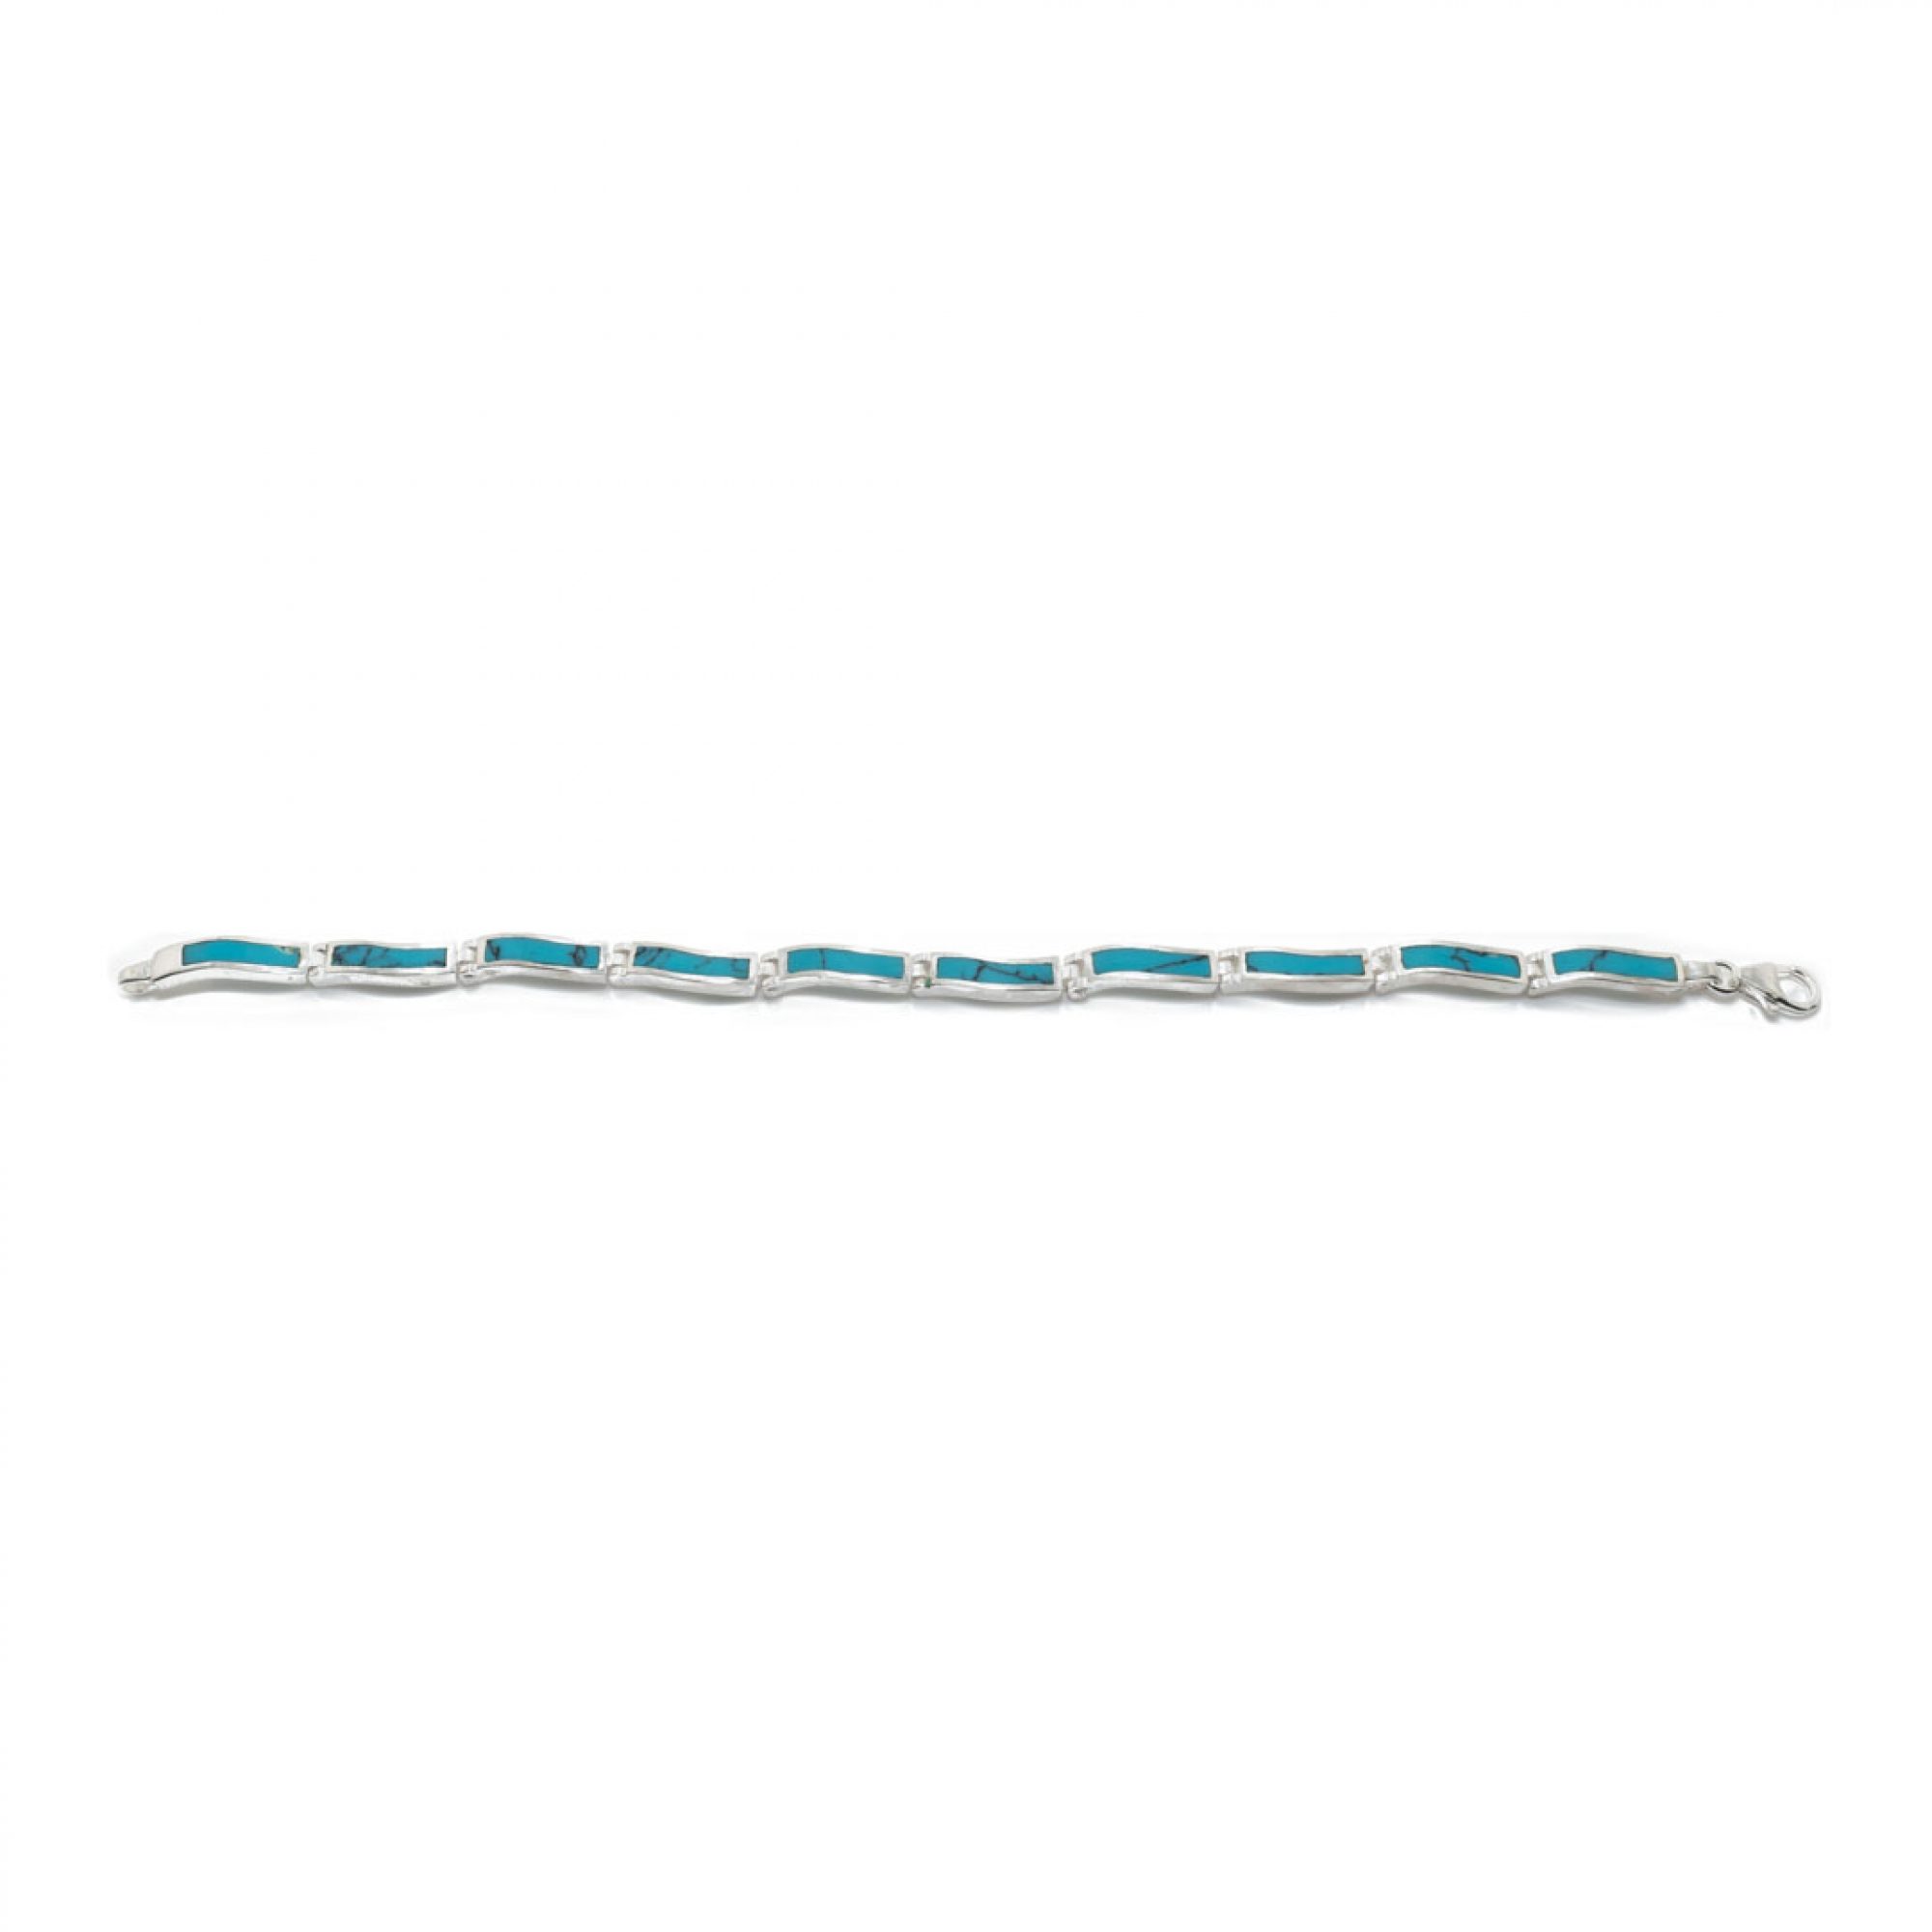 Bracelet with turquoise stones 